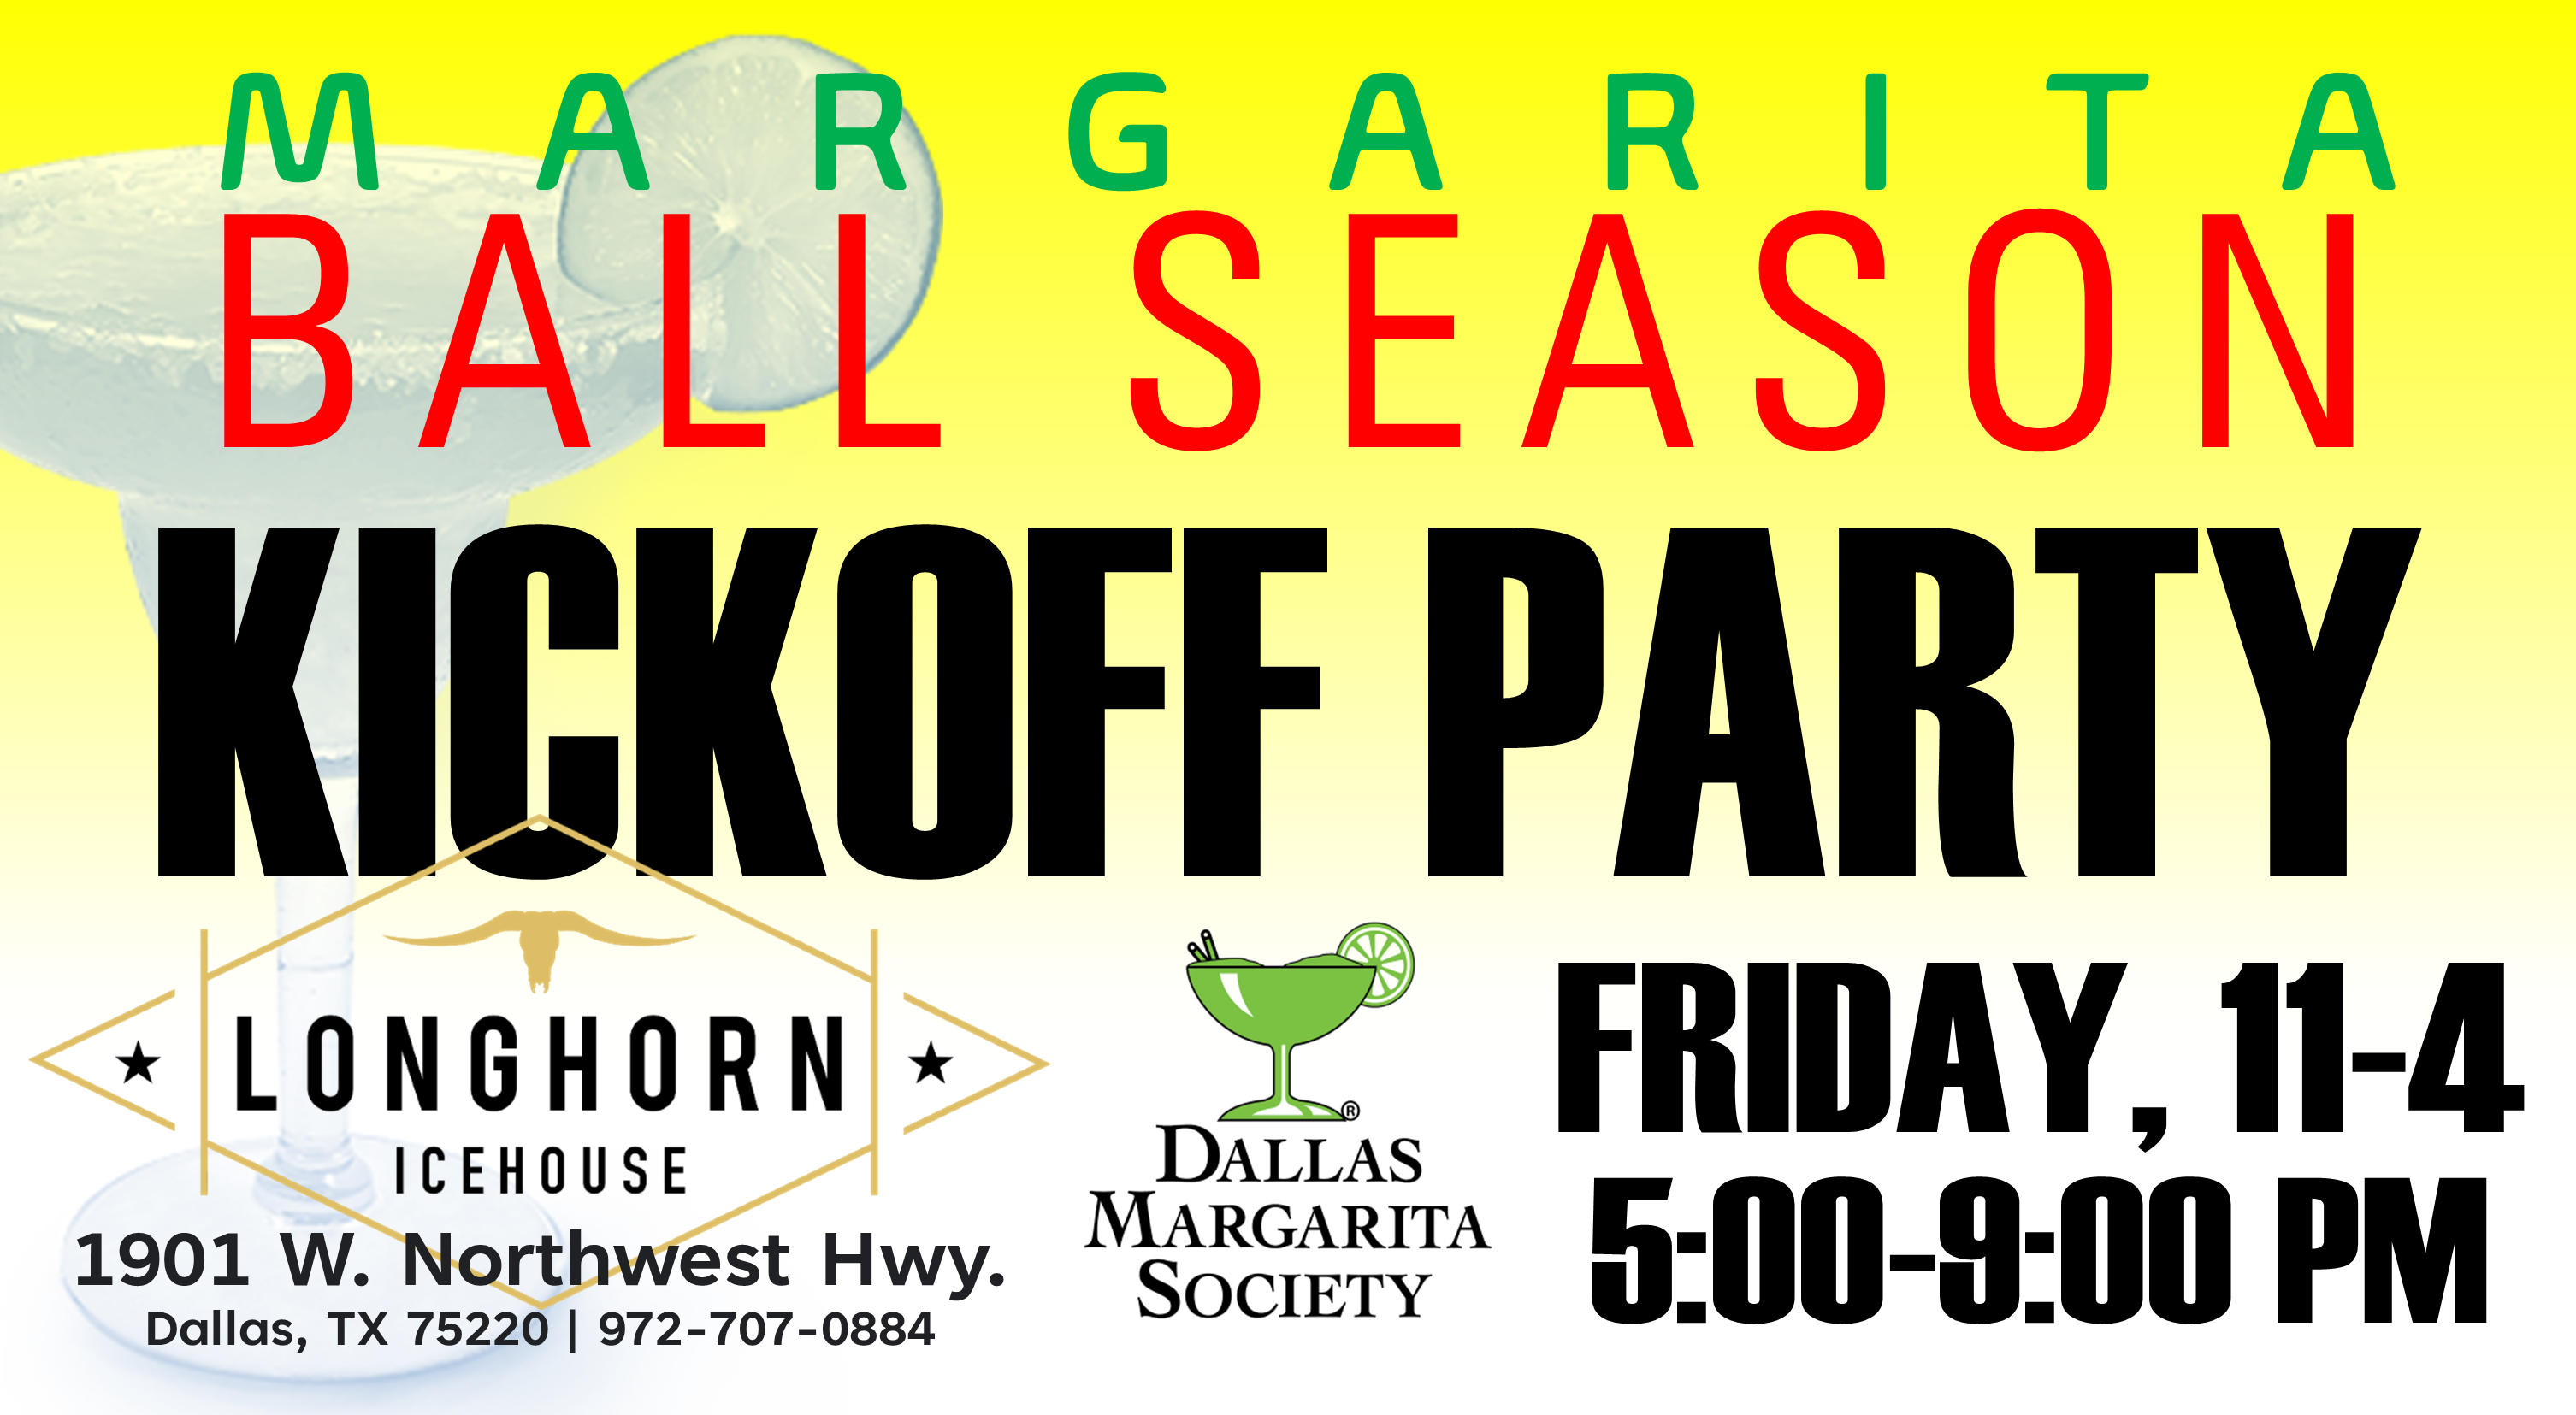 Dallas Margarita Society Margarita Ball Season Kickoff Party Dallas